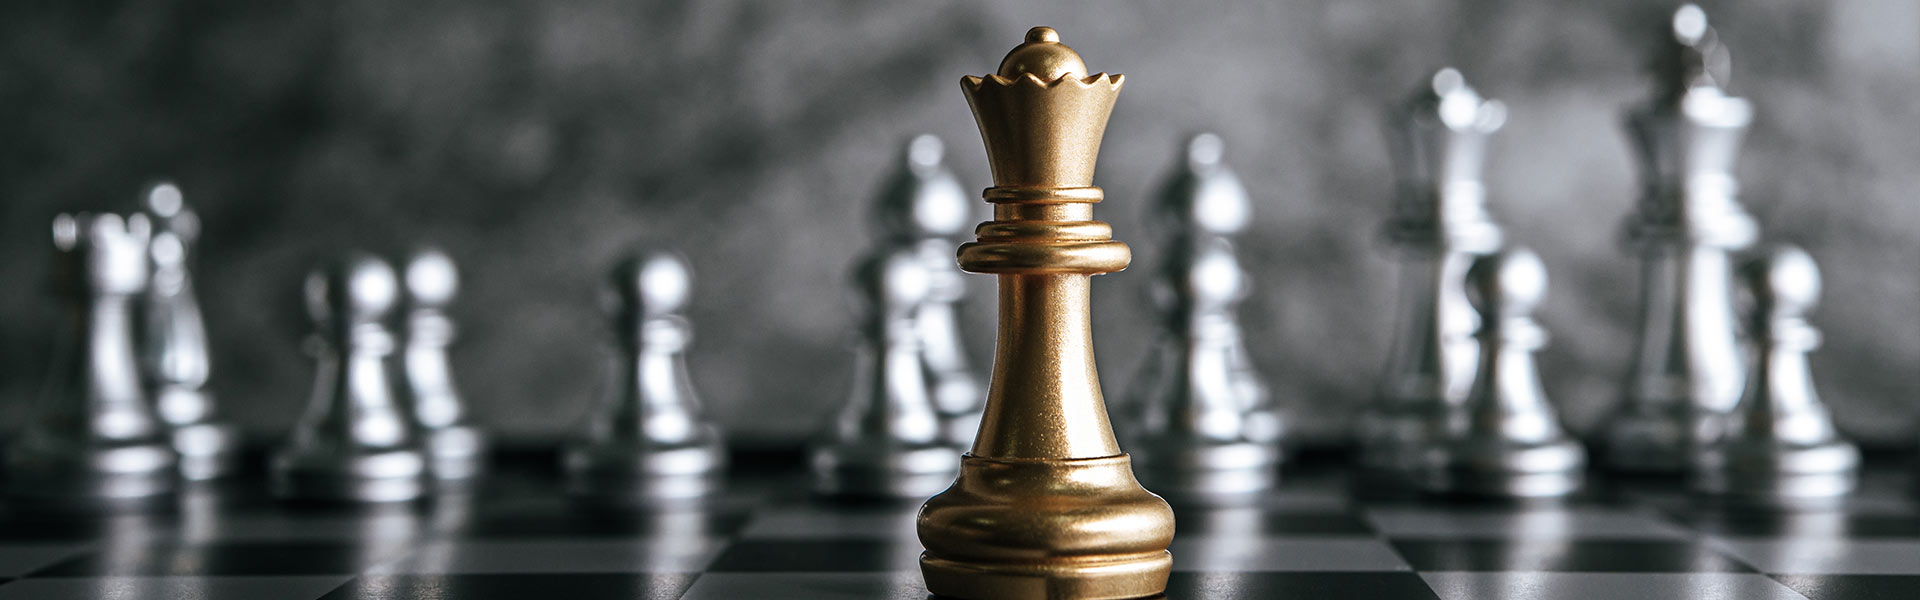 Škola šaha Hrvatska | Chess Lessons Dubai